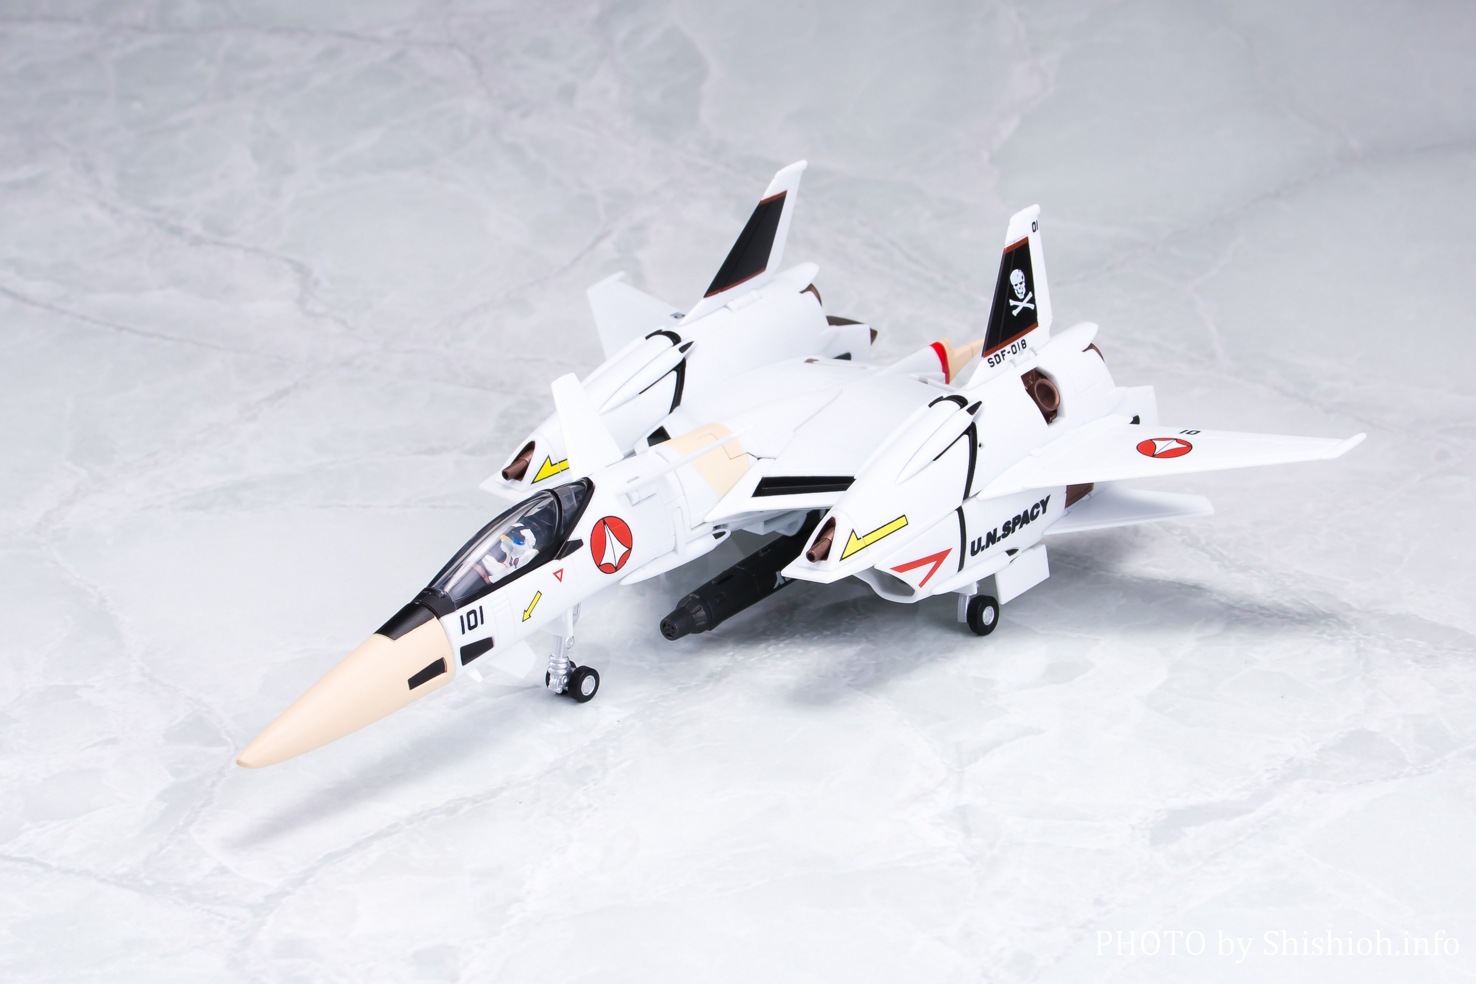 HI-METAL R VF-4 ライトニングIII